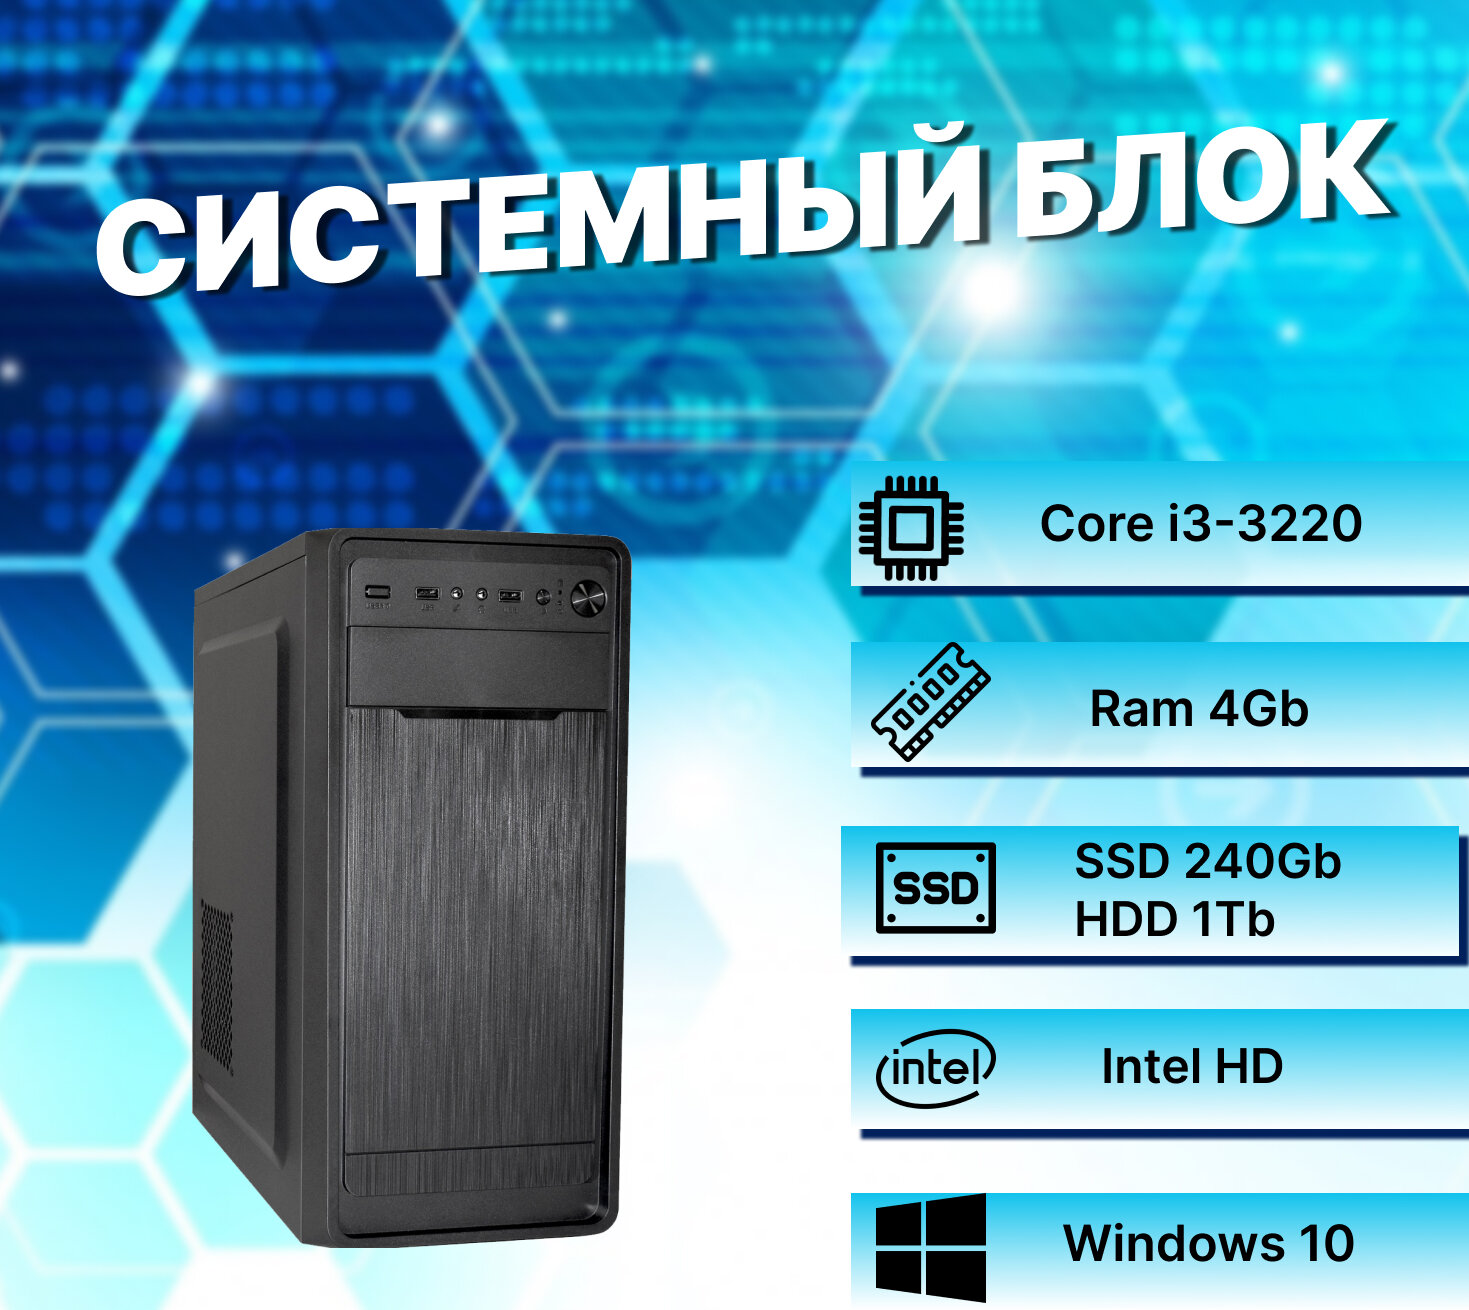 Системный блок Intel Core I3-3220 (3.4ГГц)/ RAM 4Gb/ SSD 240Gb/ HDD 1Tb/ Intel HD/ Windows 10 Pro